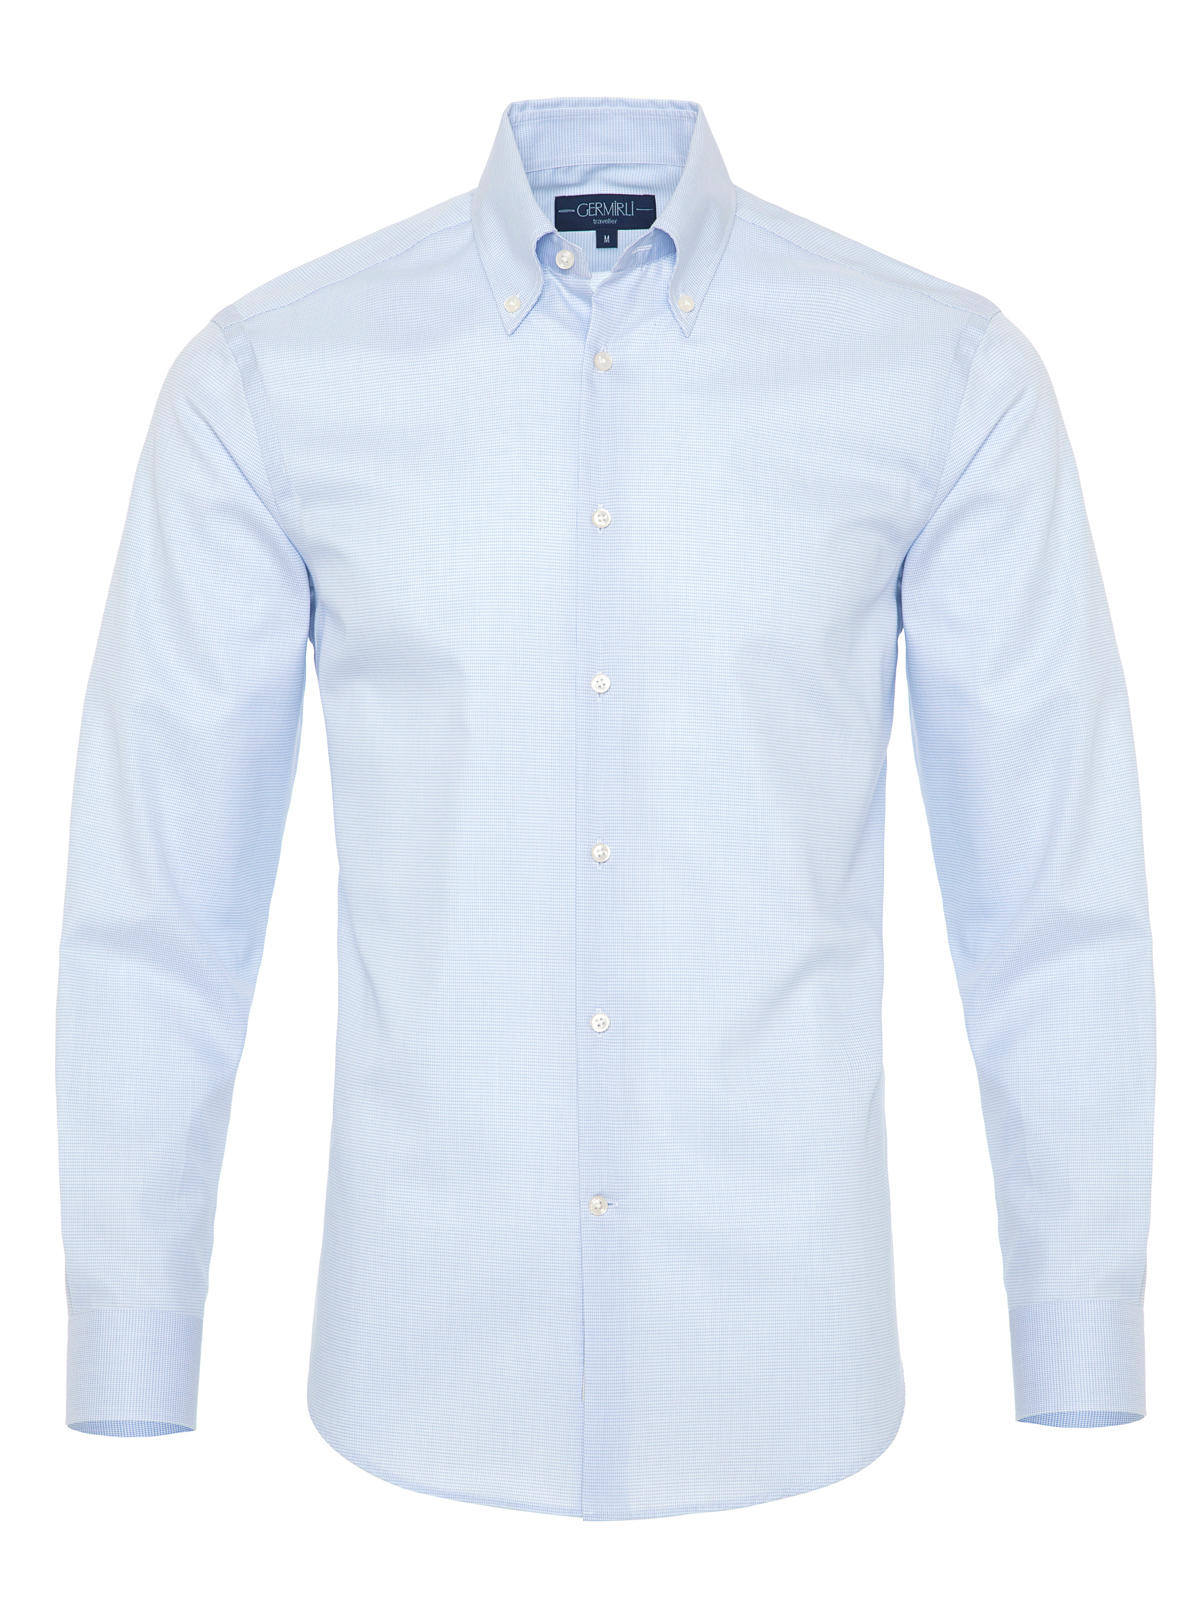 Germirli - Germirli Non Iron Light Blue White Plaid Button Down Collar Tailor Fit Zero 24 Shirt